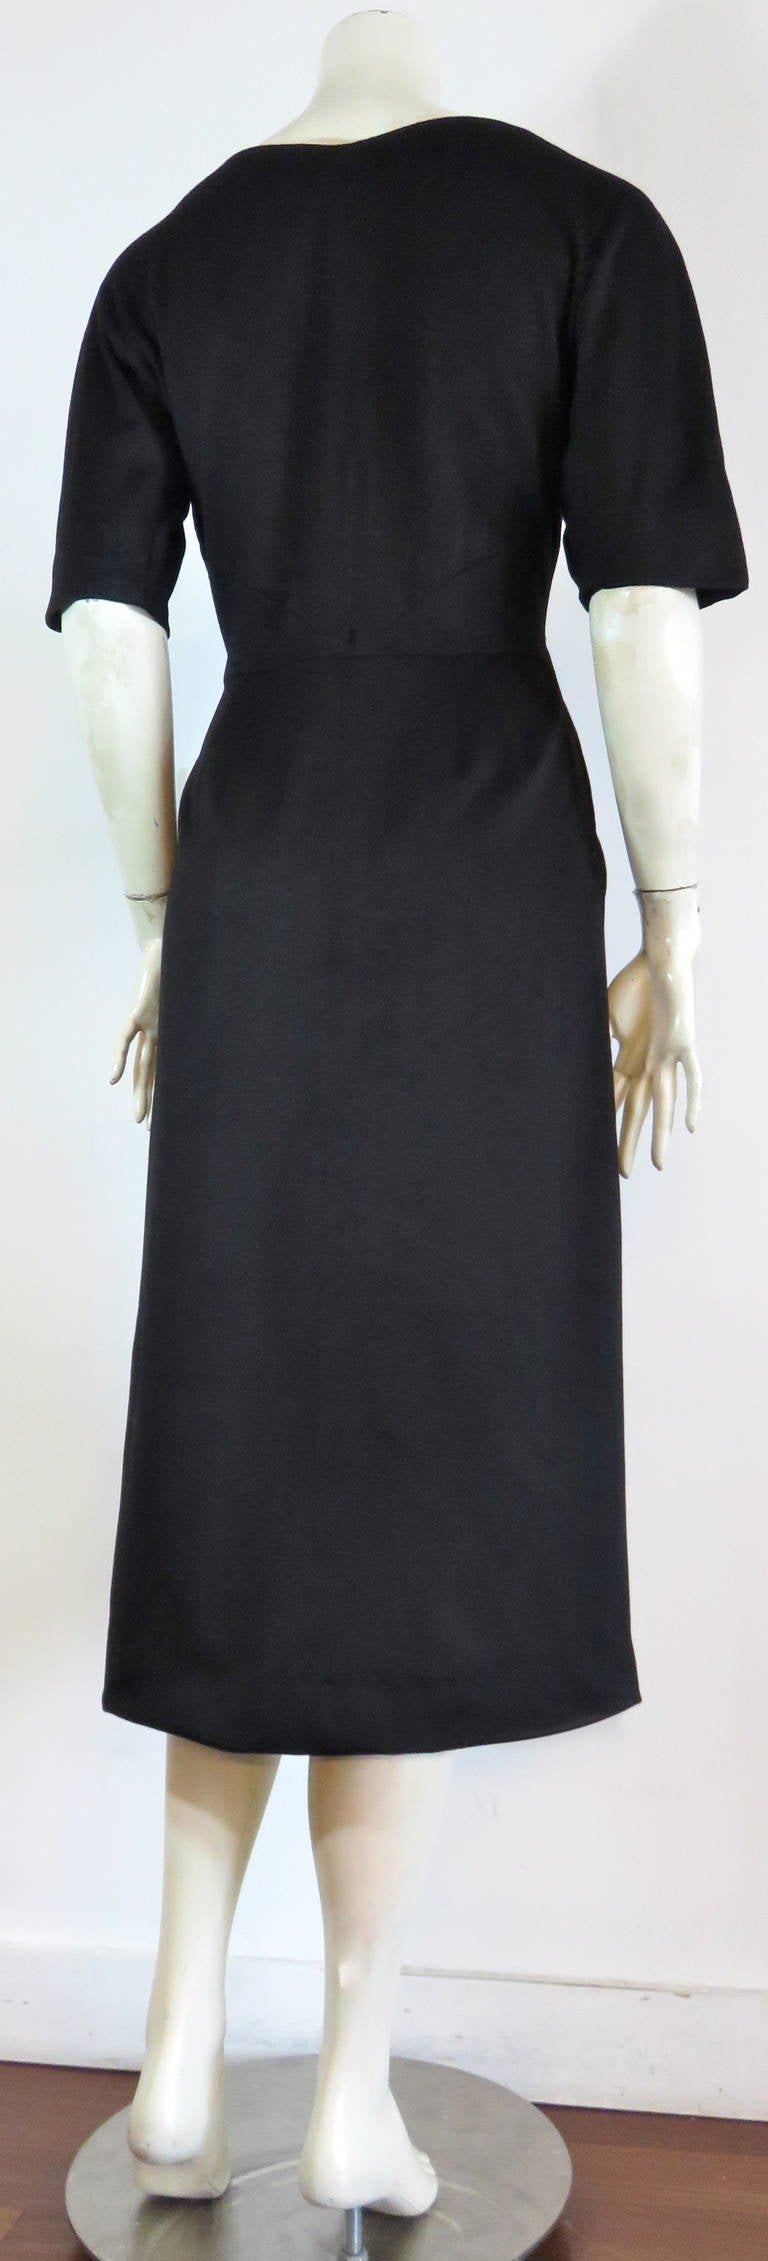 1950's HATTIE CARNEGIE Black wool cashmere dress For Sale 2